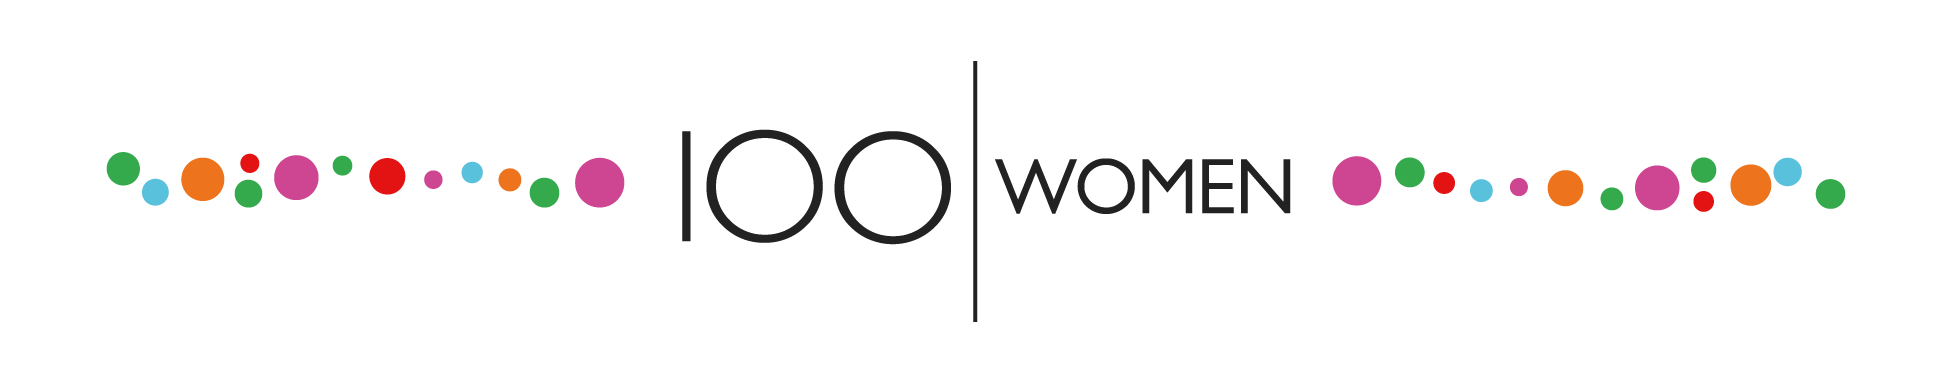 100 Women - BBC World Service